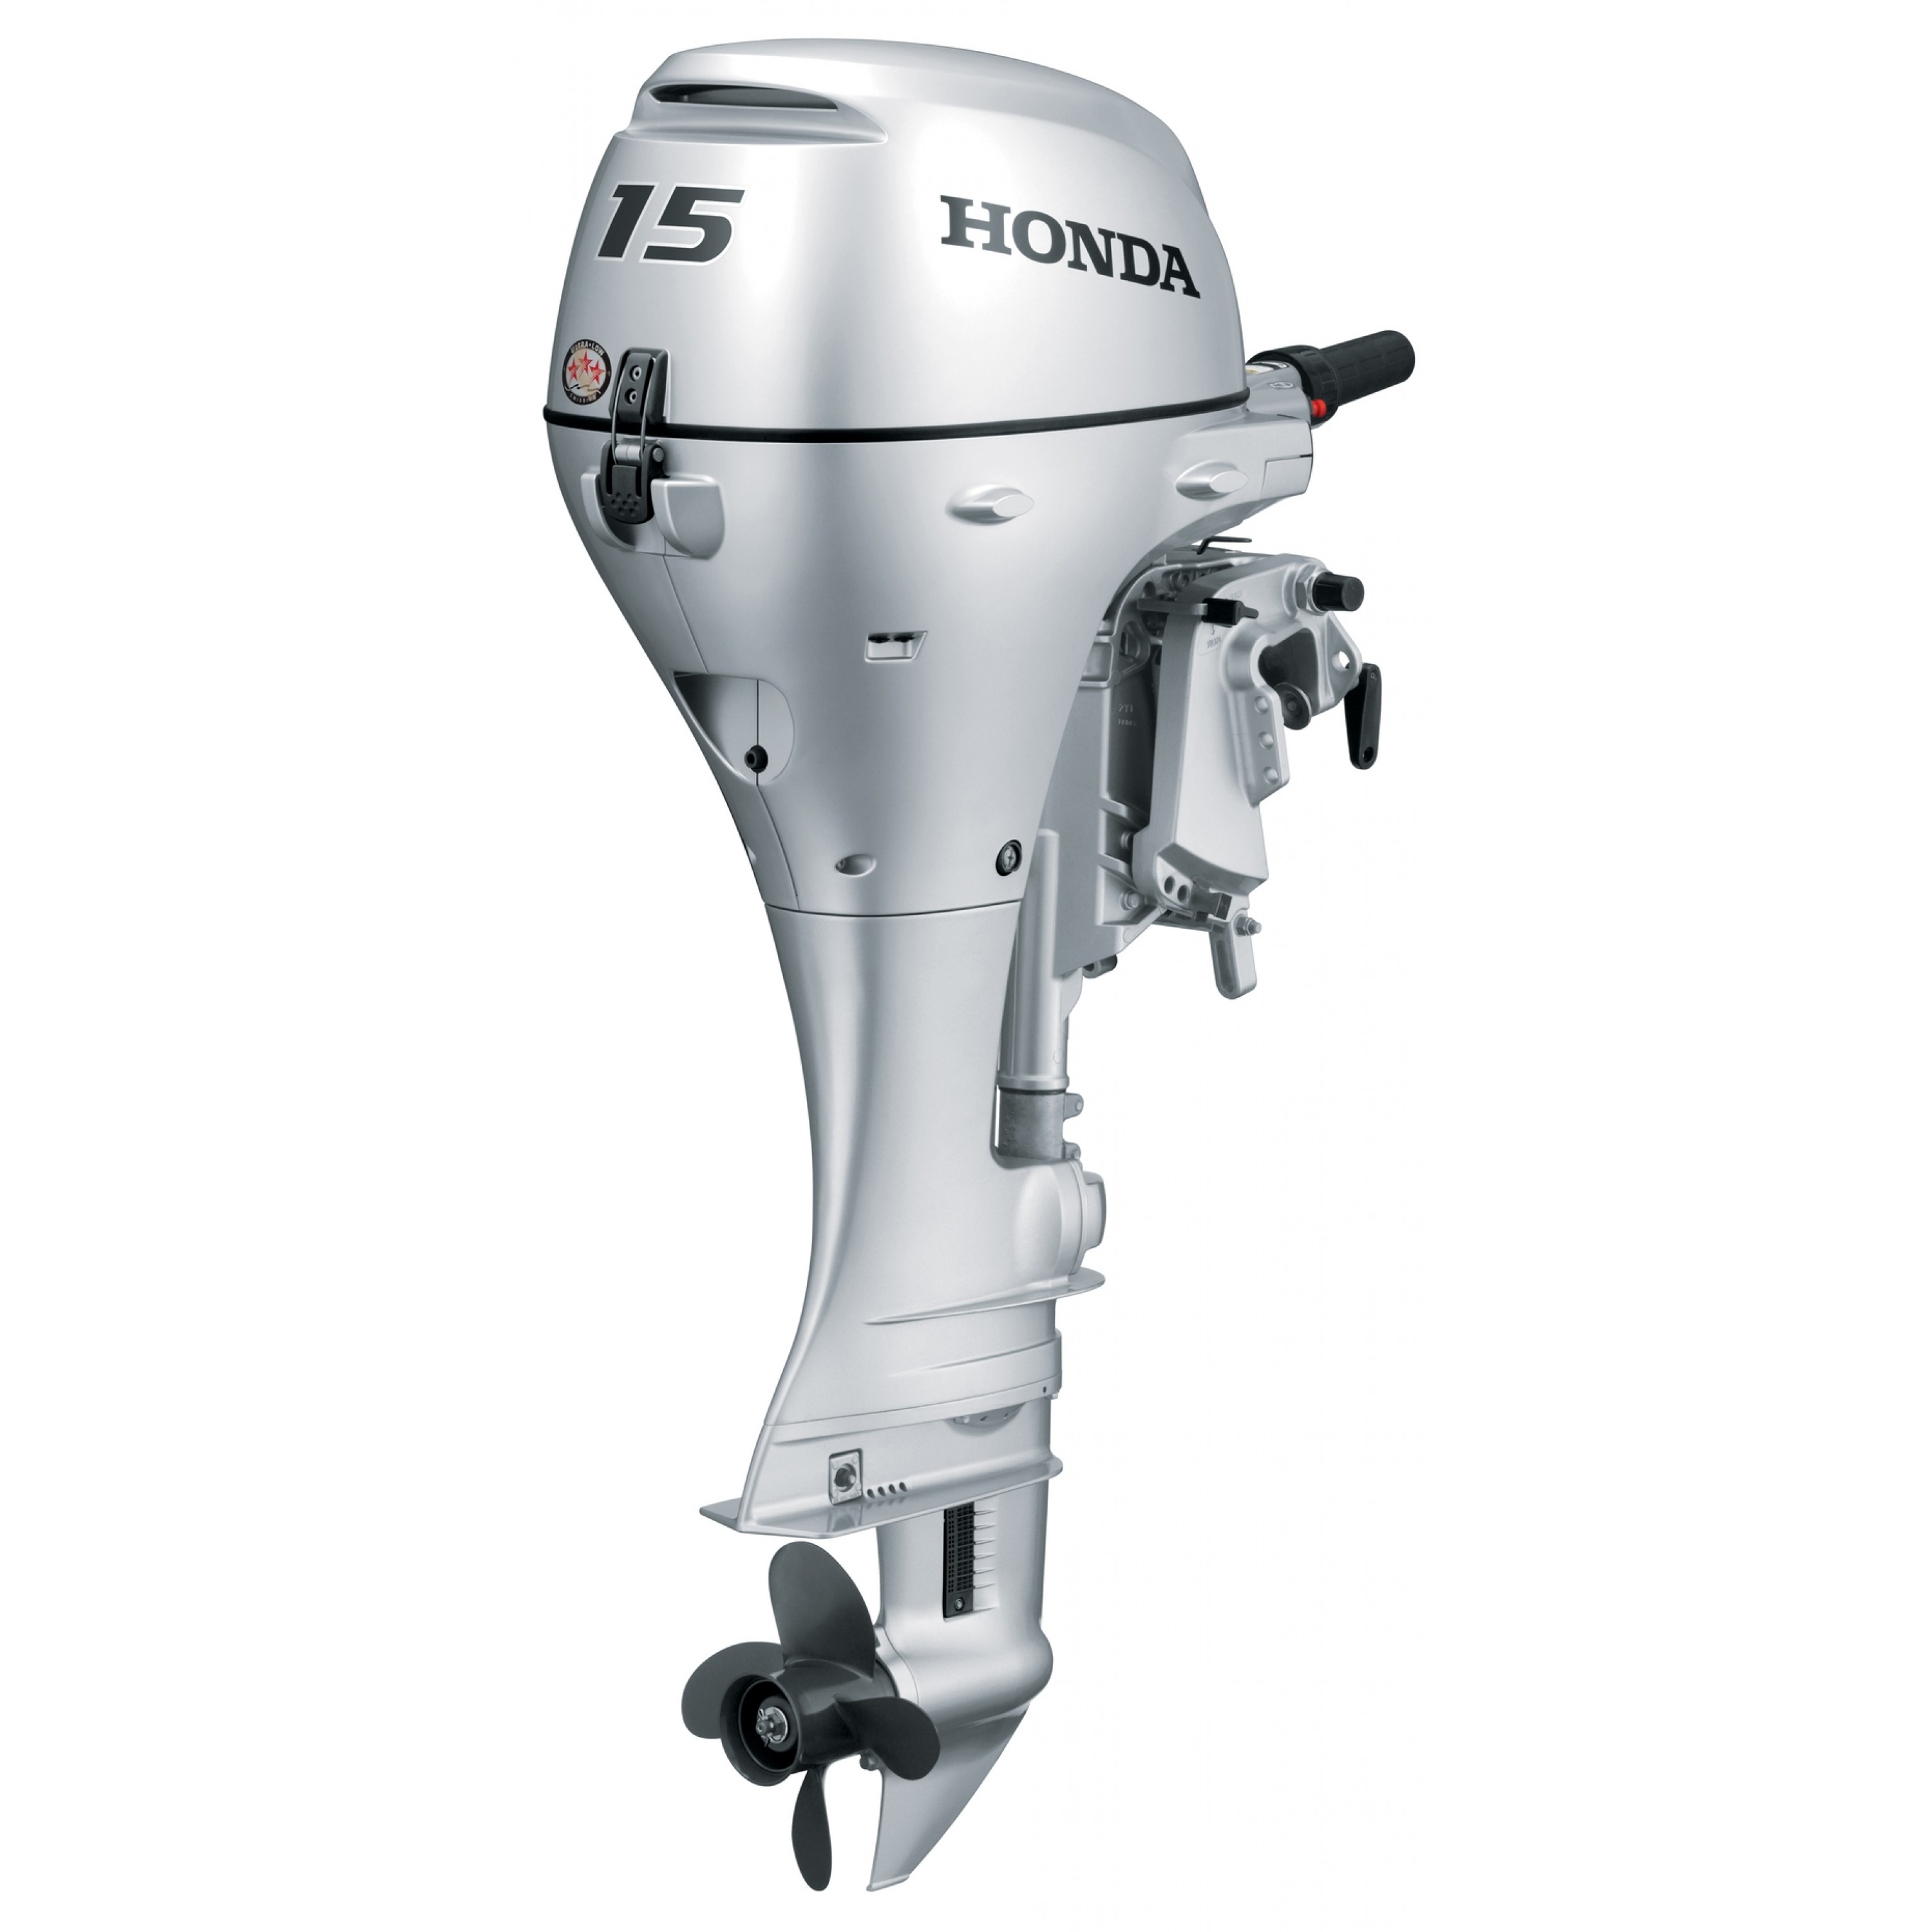 15 HP Honda Outboard Motor, BF15DK3LHC